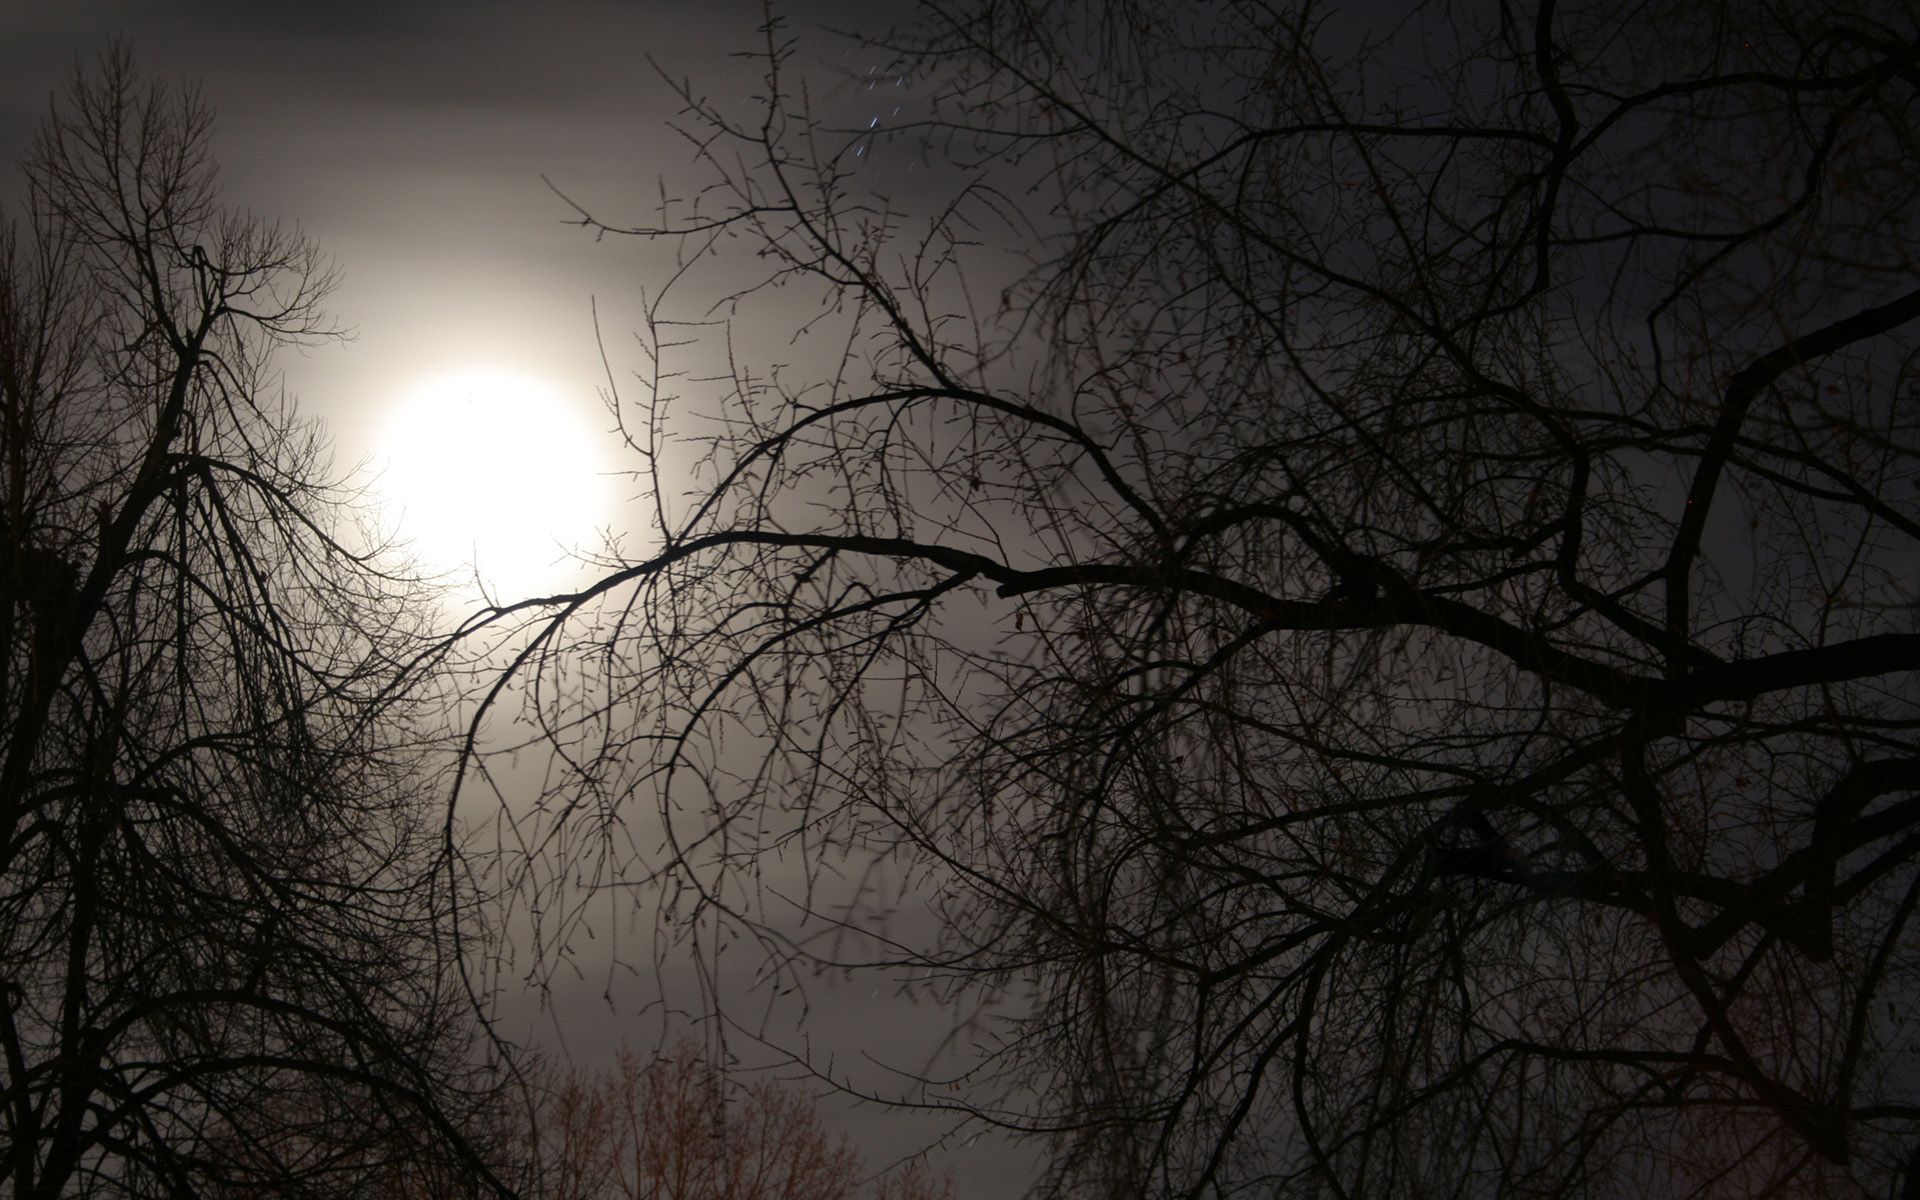 Moon illuminating a tranquil nature scene